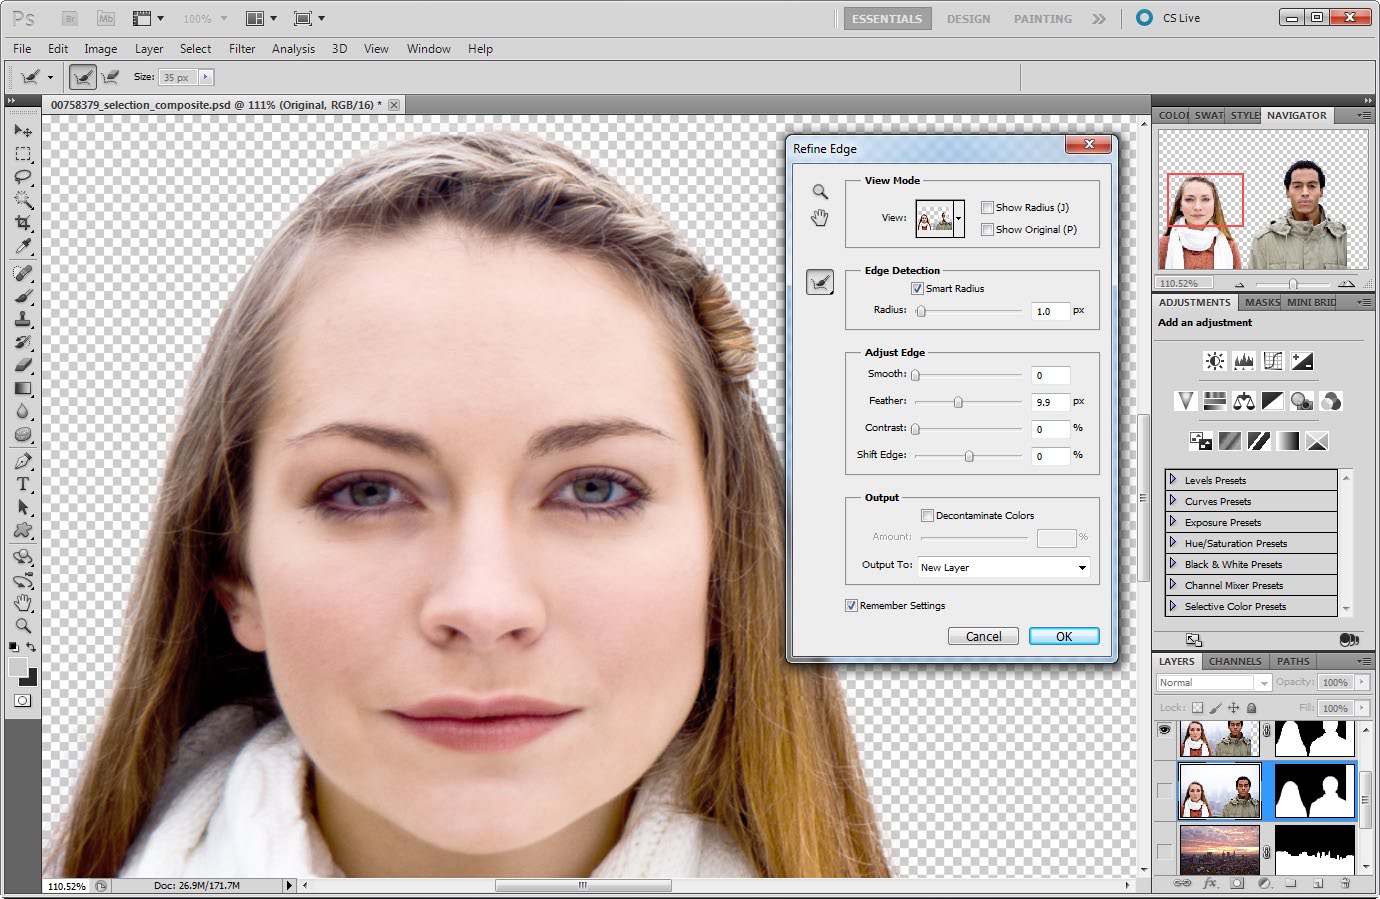 Adobe Photoshop CS5 for Windows Refine Edge Feature (2010)